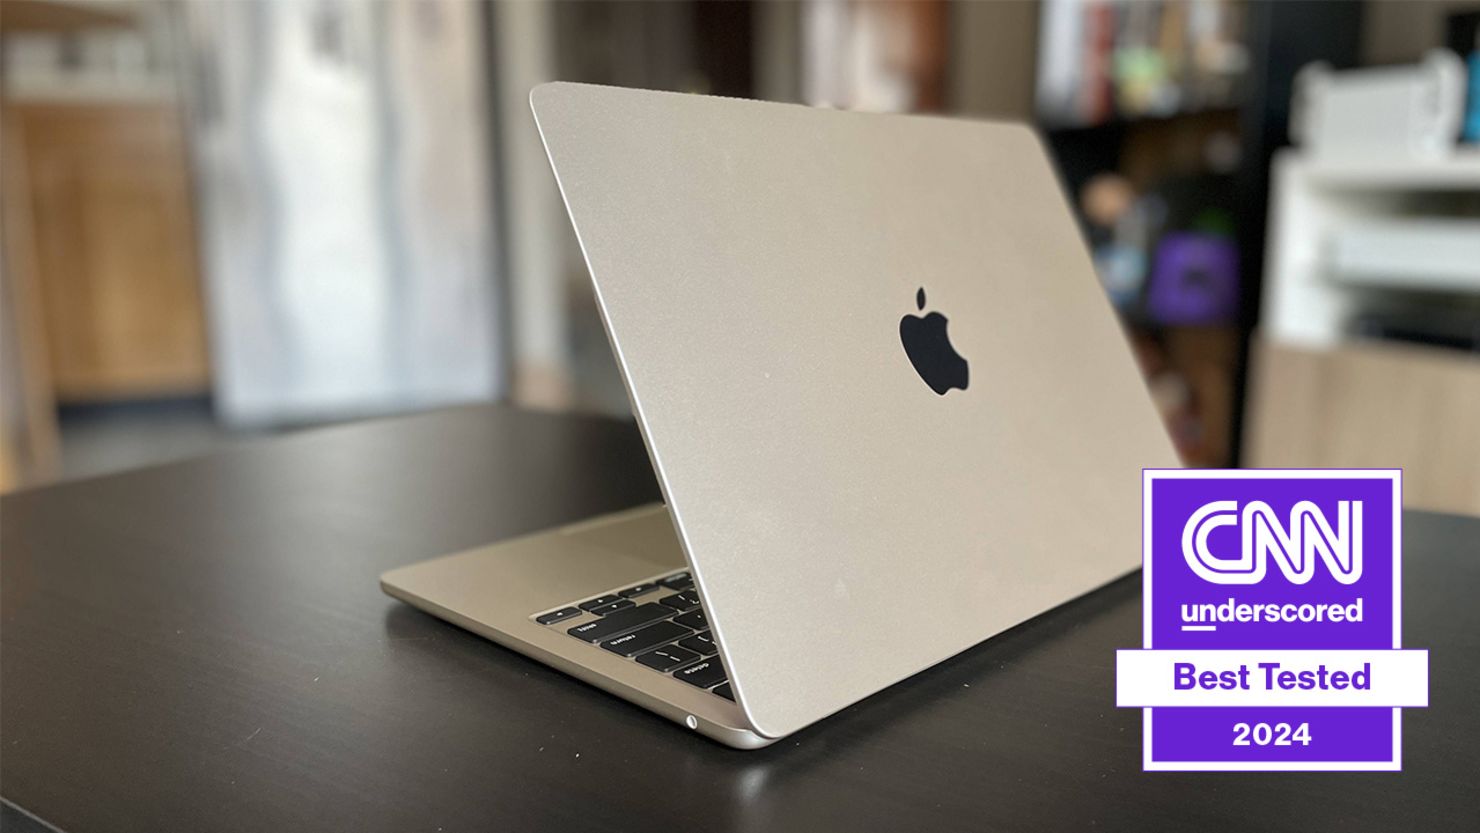 MacBook Pro Review in Progress: Powerful, Sleek, Same